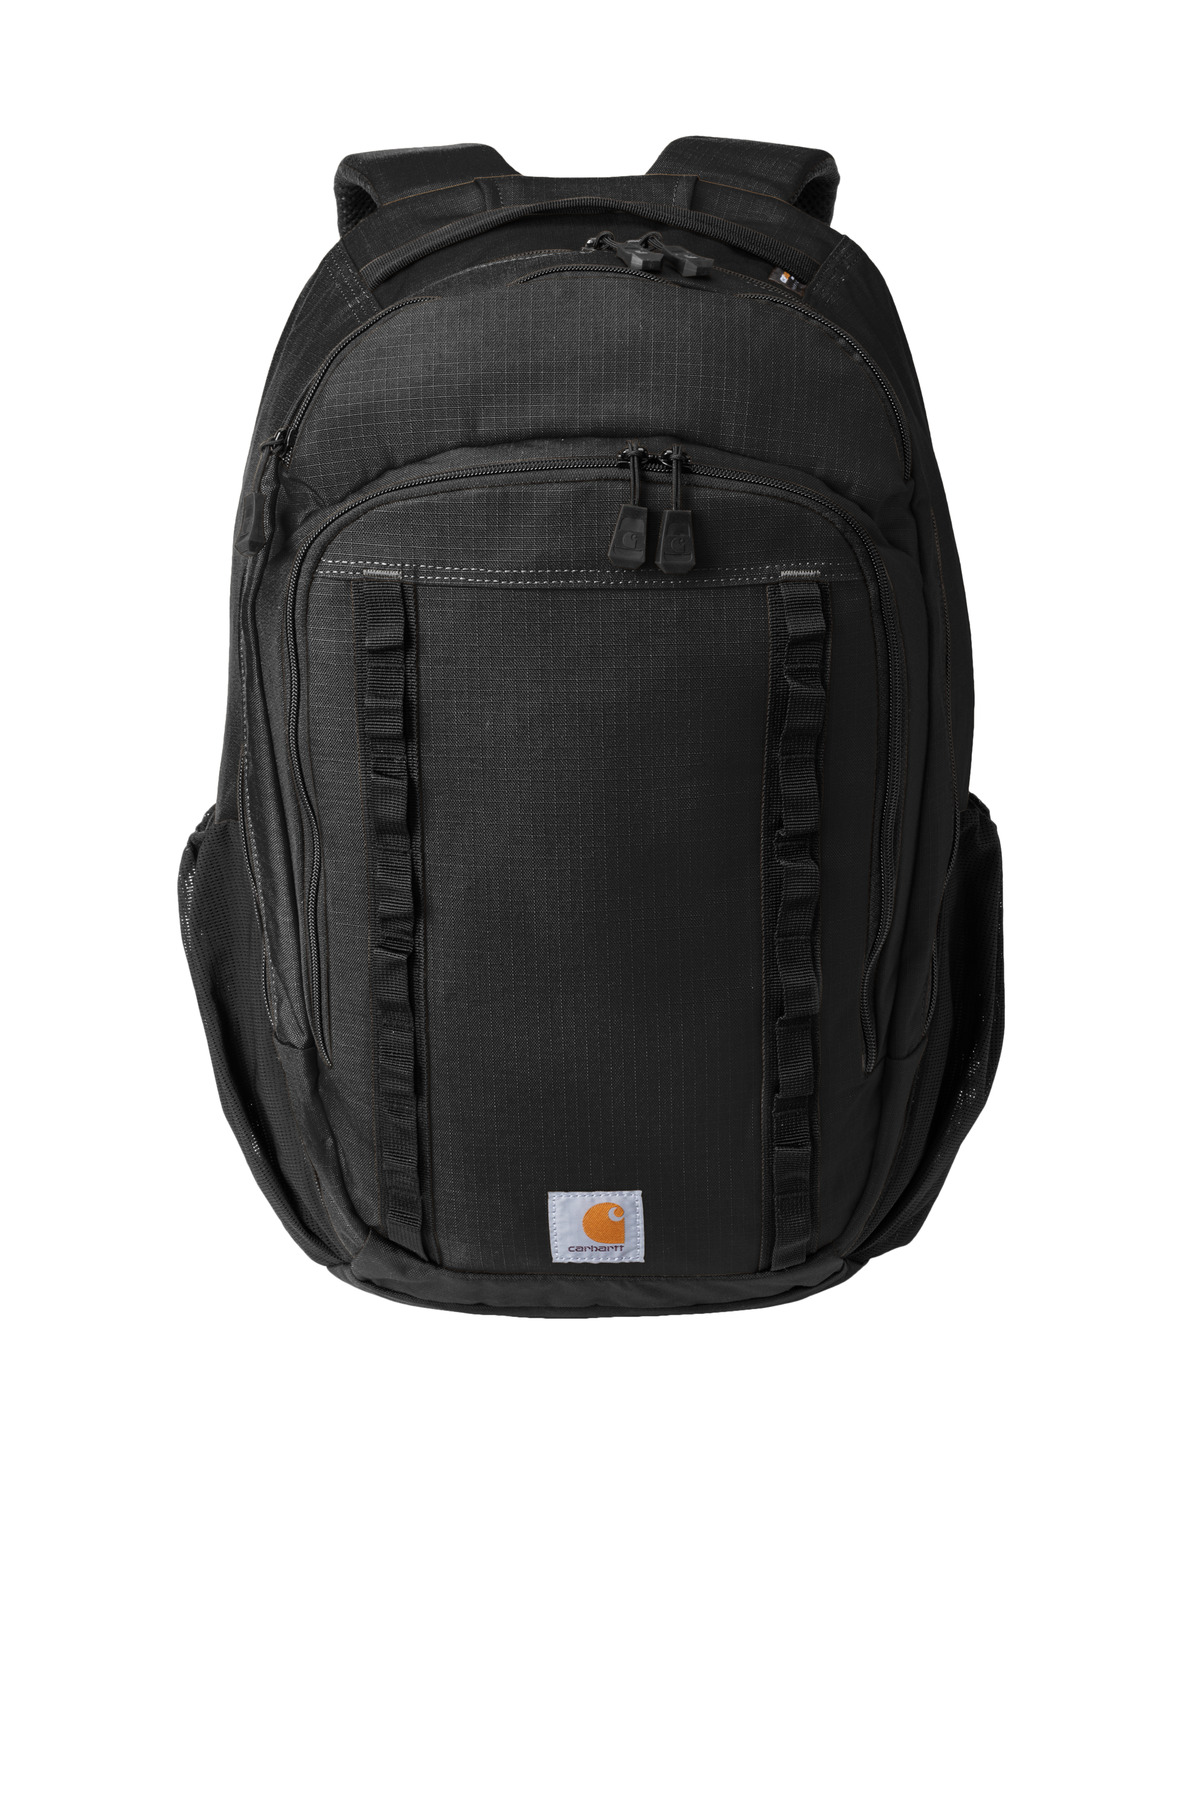 Buy Carhartt 25L Ripstop Backpack - Carhartt Online at Best price - SC